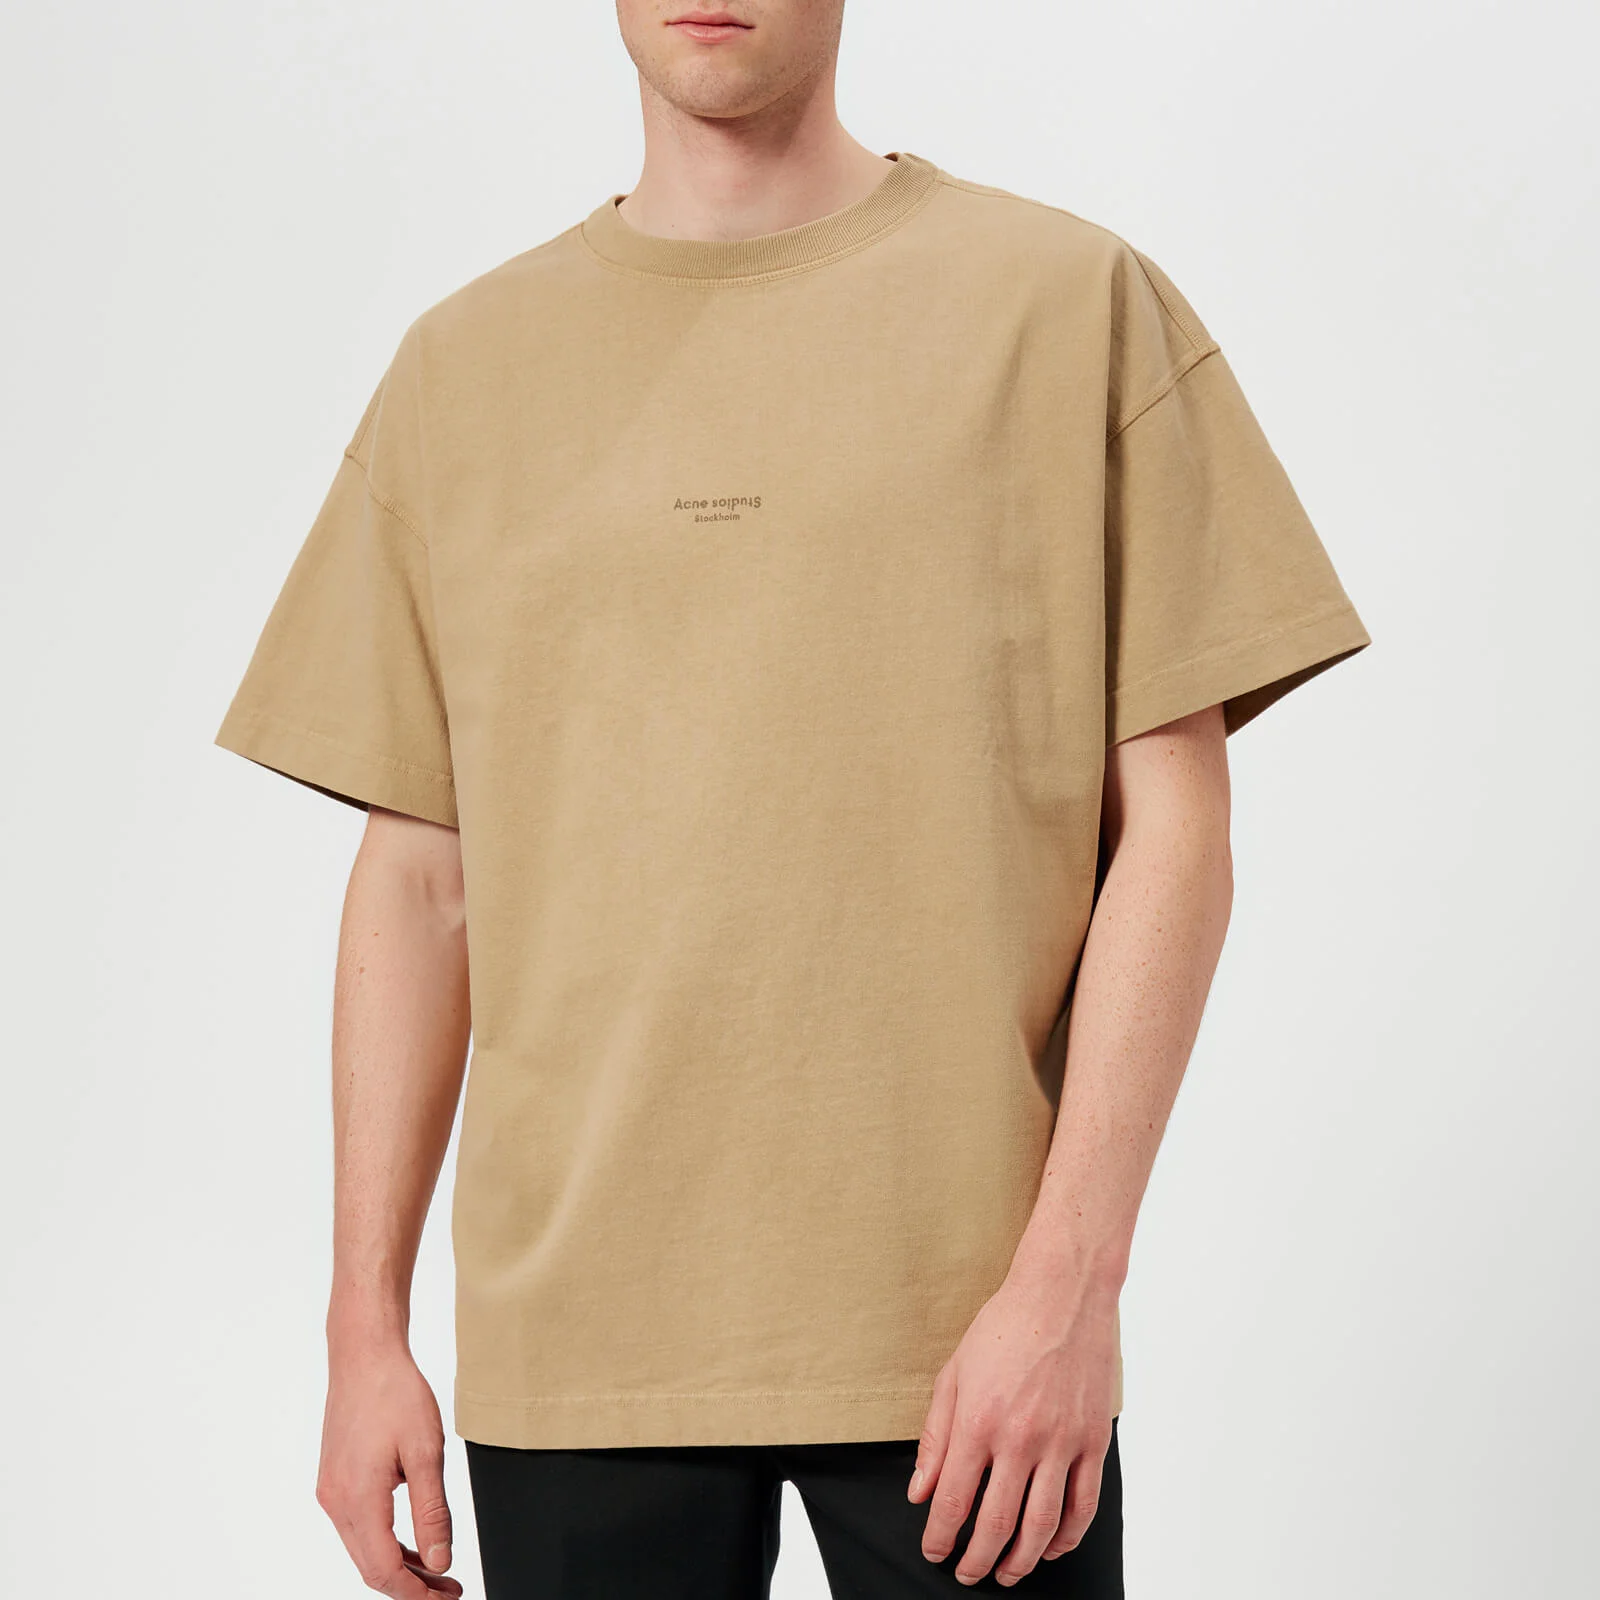 Acne Studios Men's Jaxon Oversized T-Shirt - Sand Beige Image 1